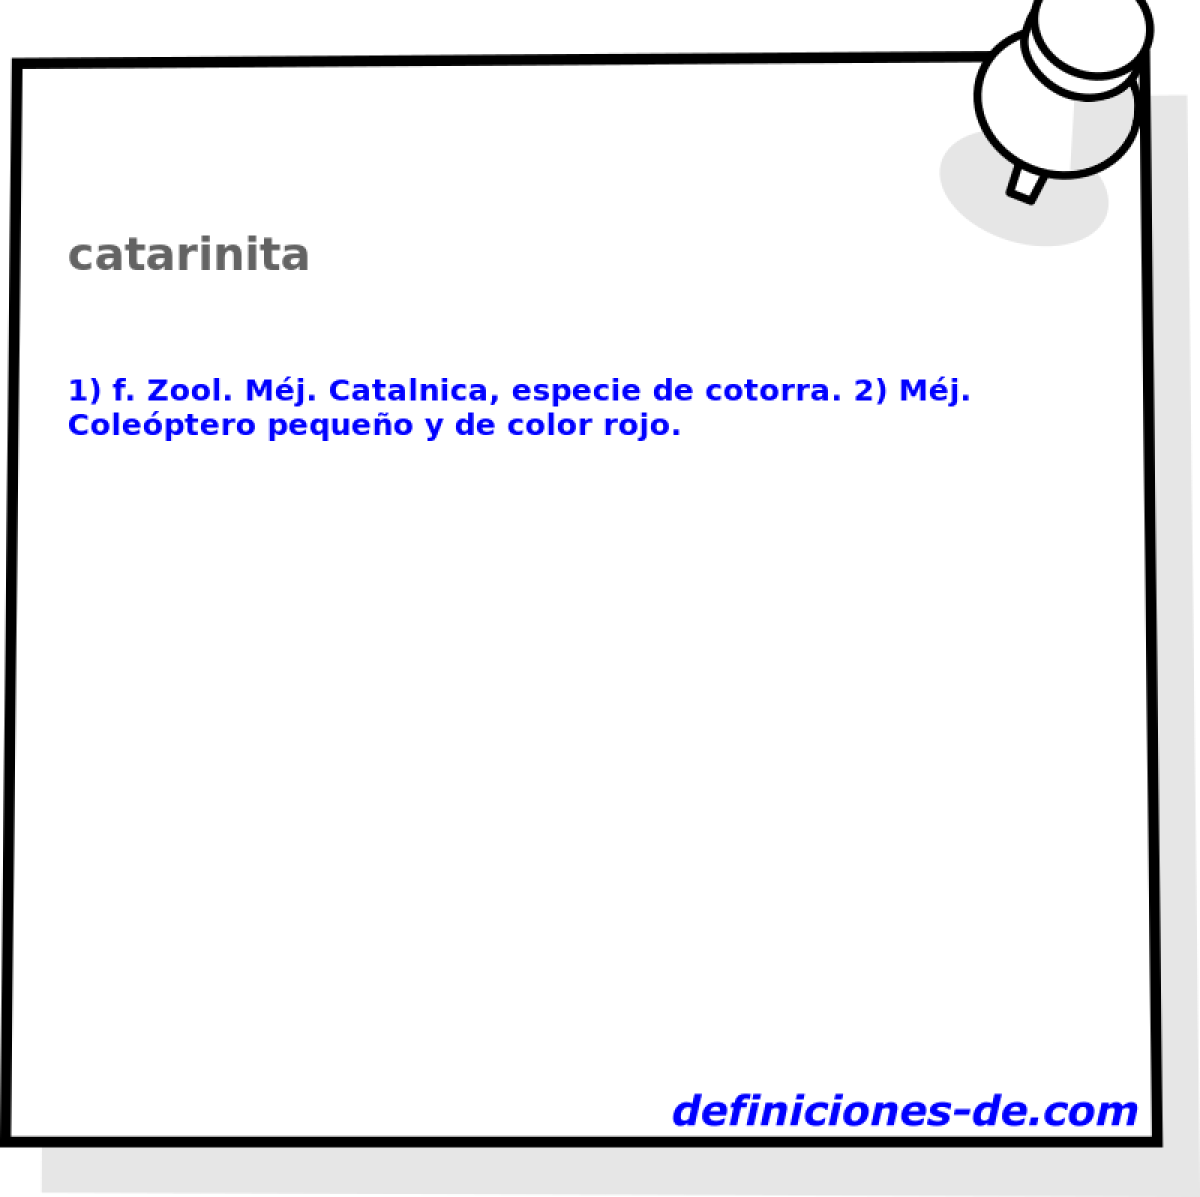 catarinita 